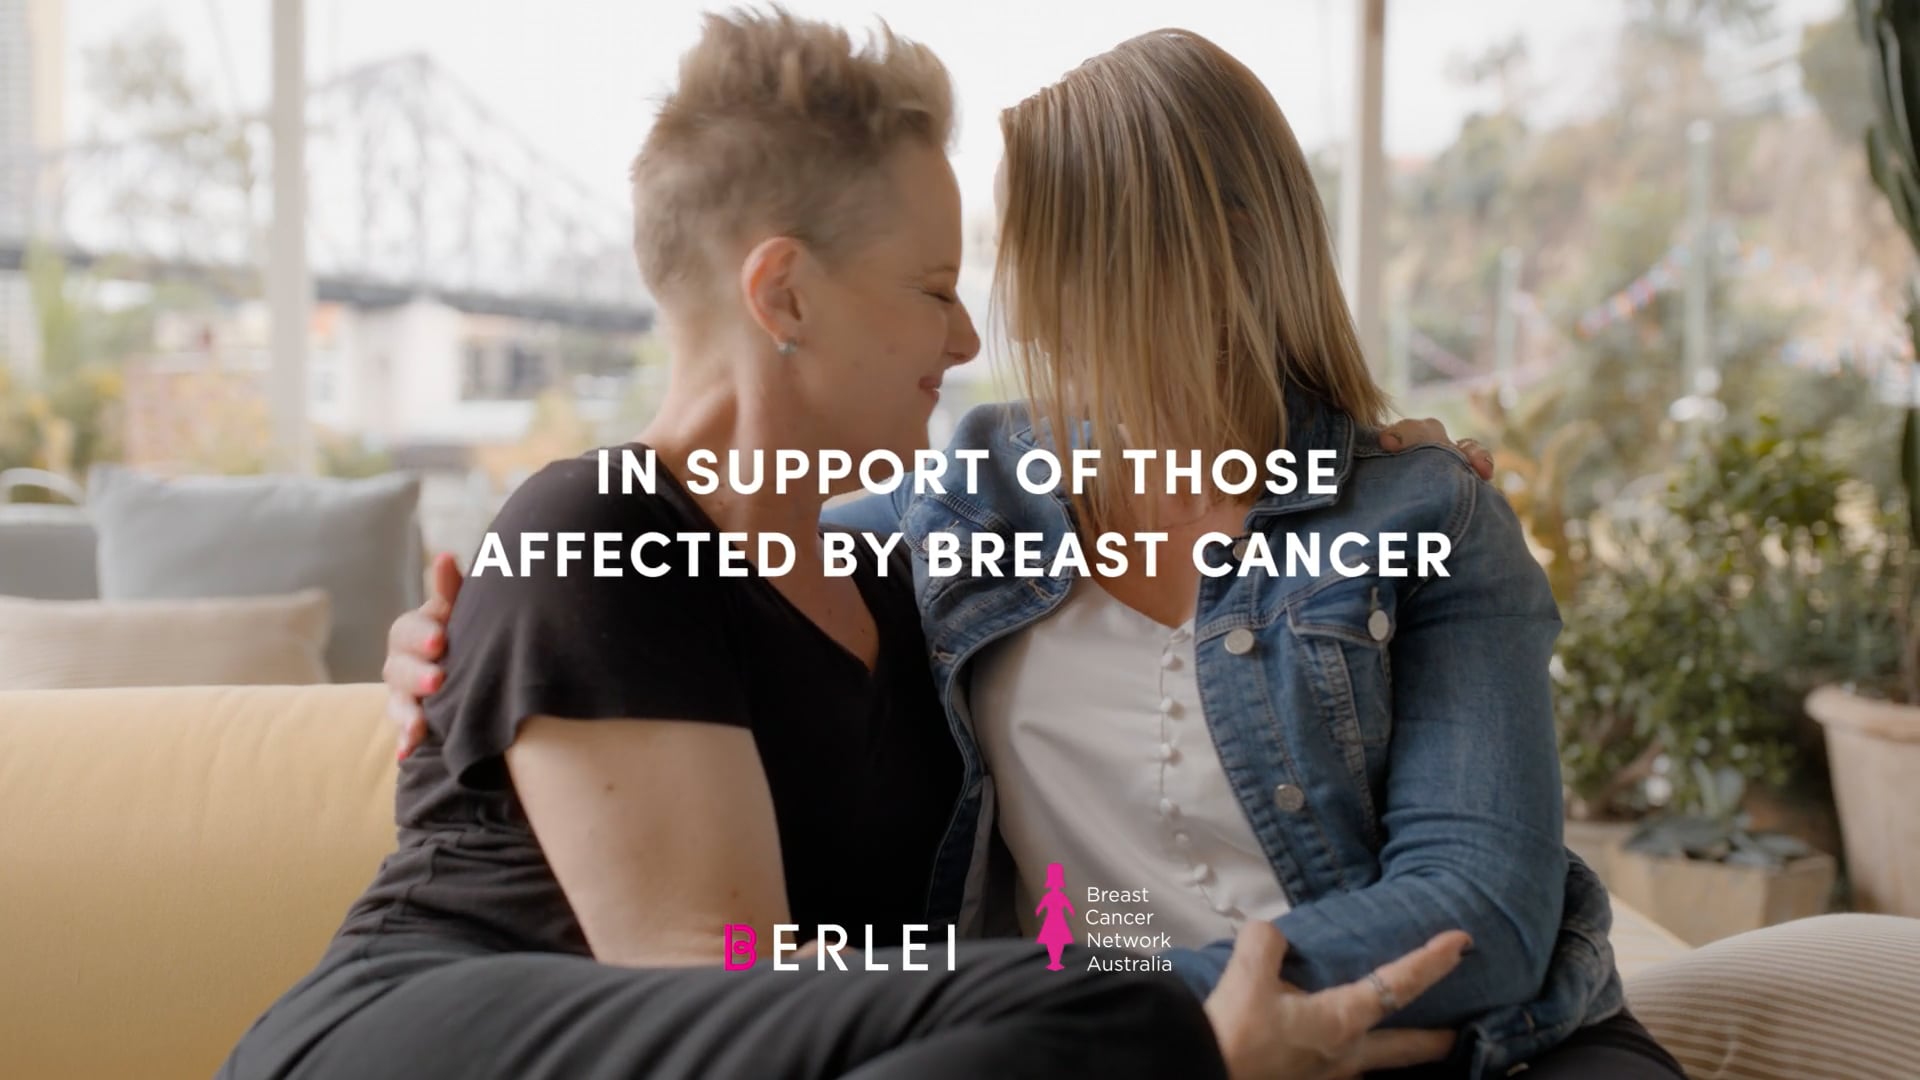 Berlie - Breast Cancer Network Australia